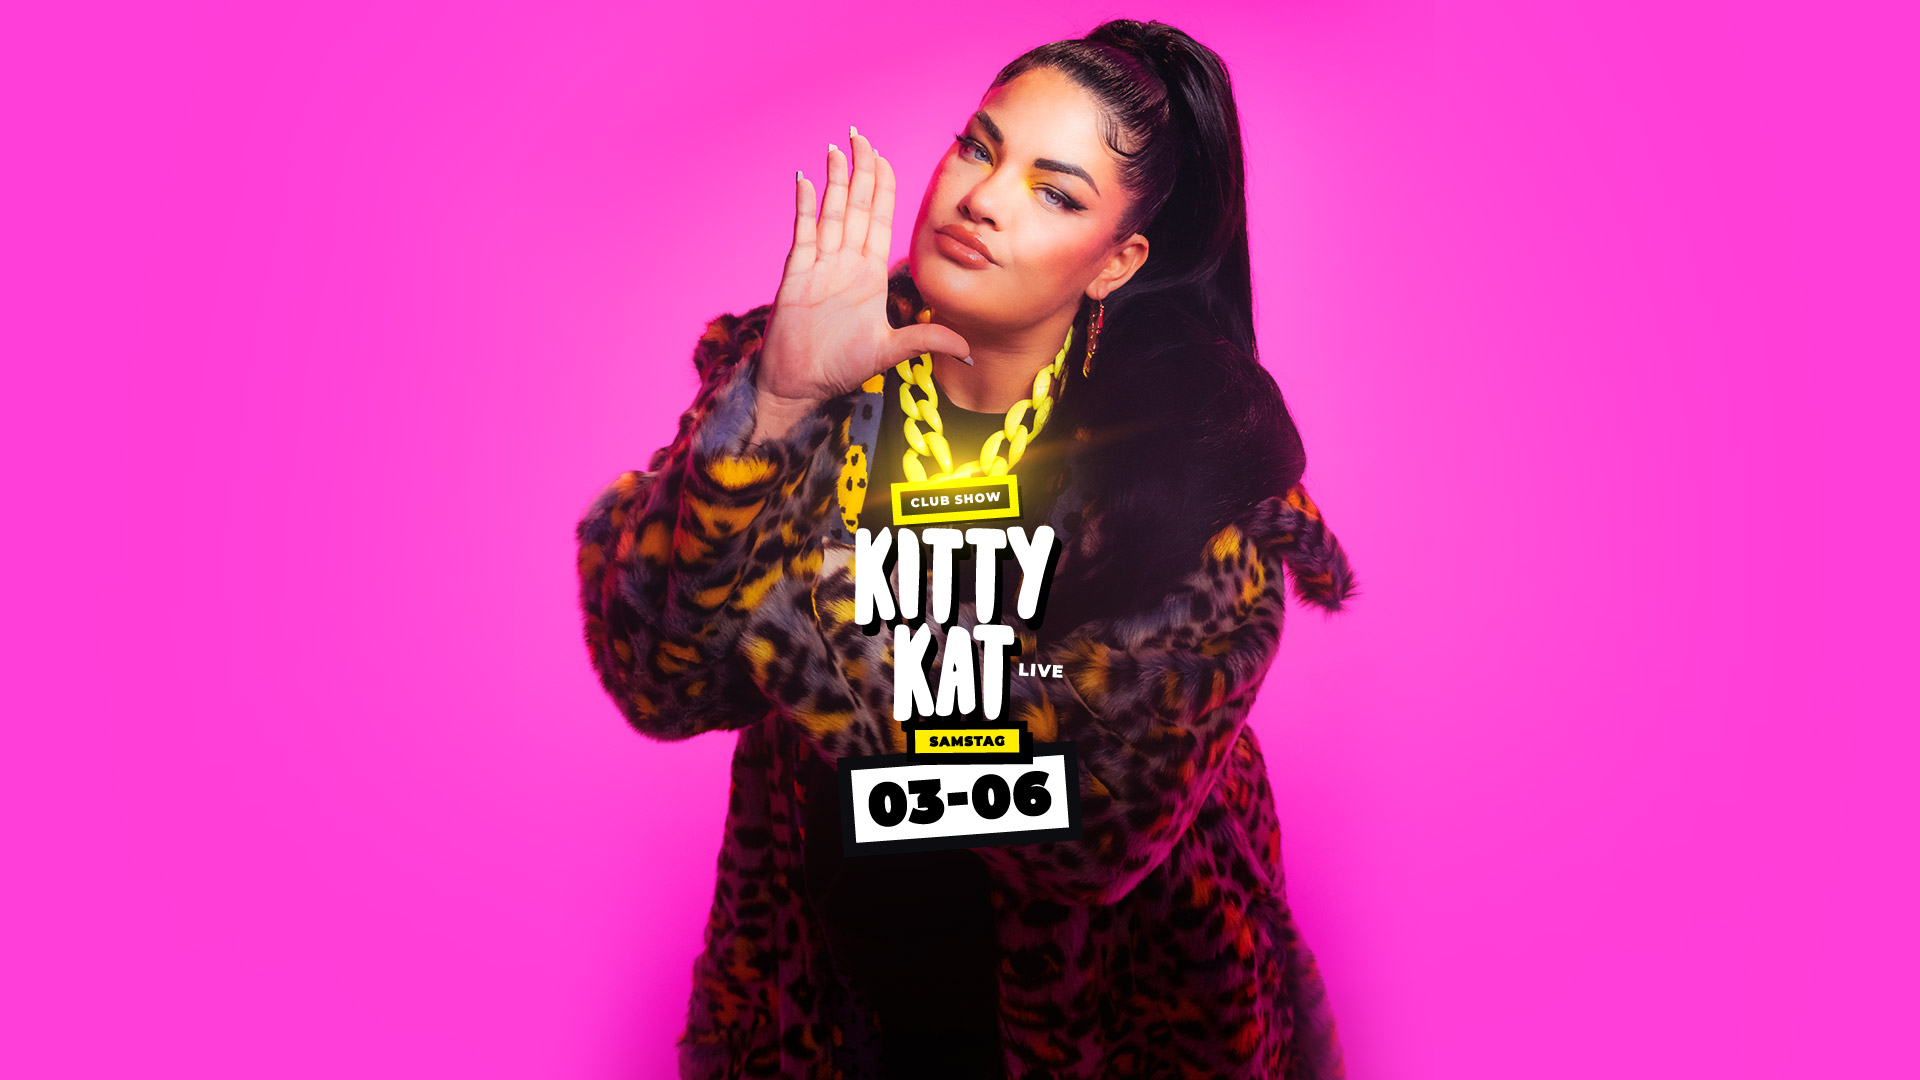 Kitty Kat Club No4 